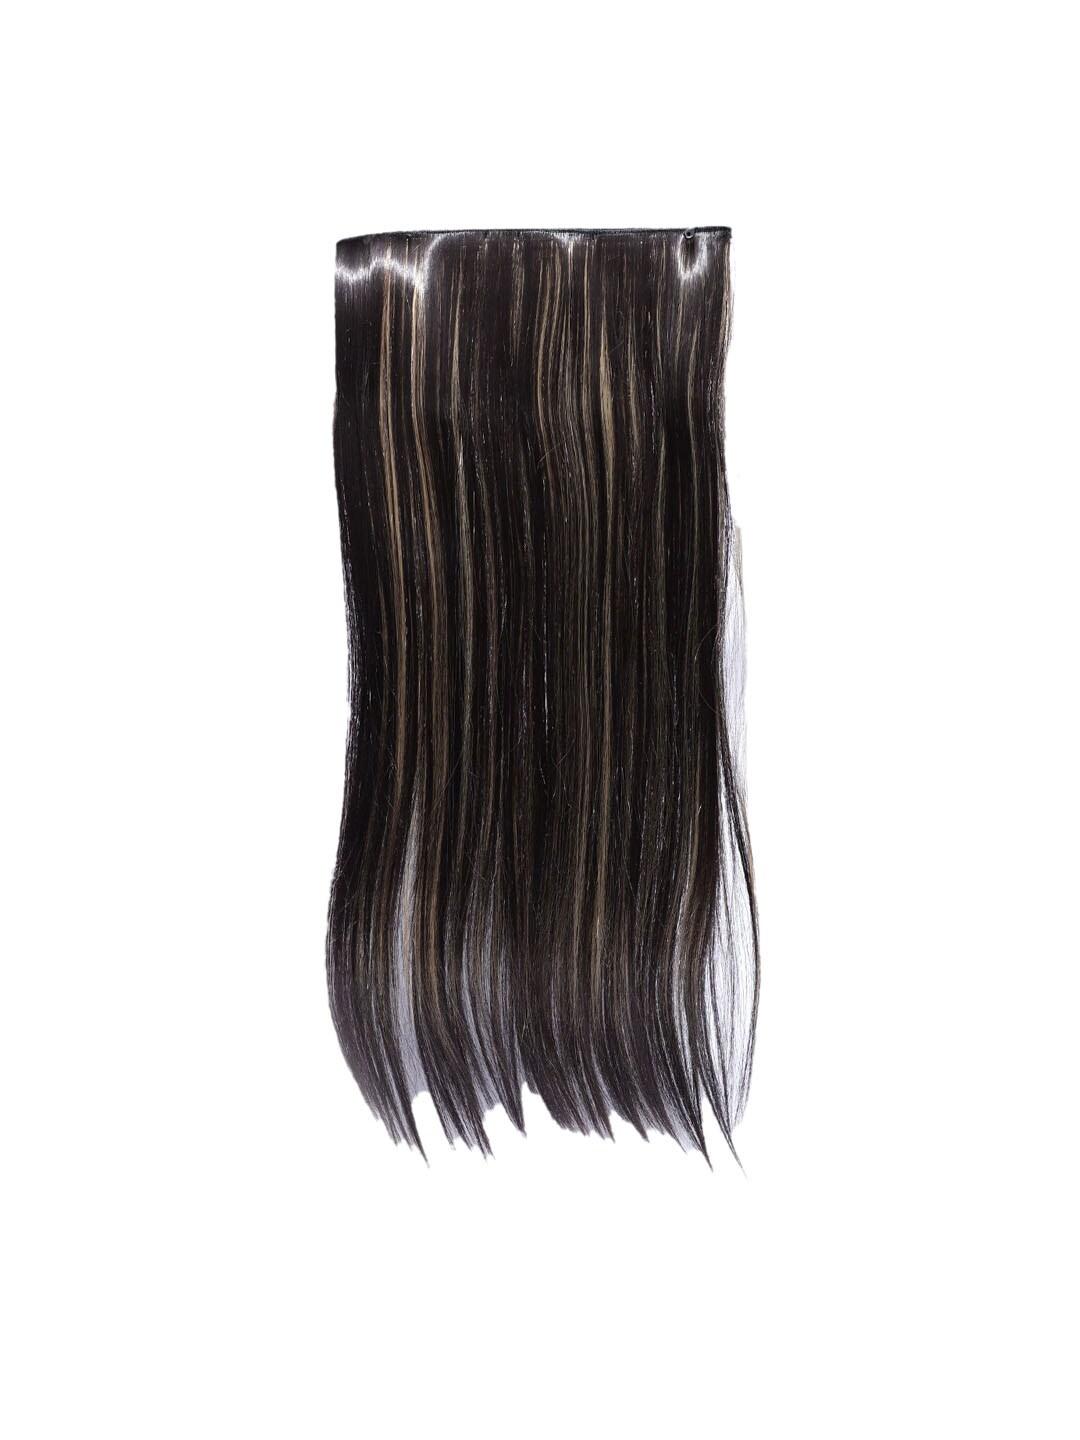 CHRONEX 5 Clips Based Highlighter Long Straight Hair Extension-Wig